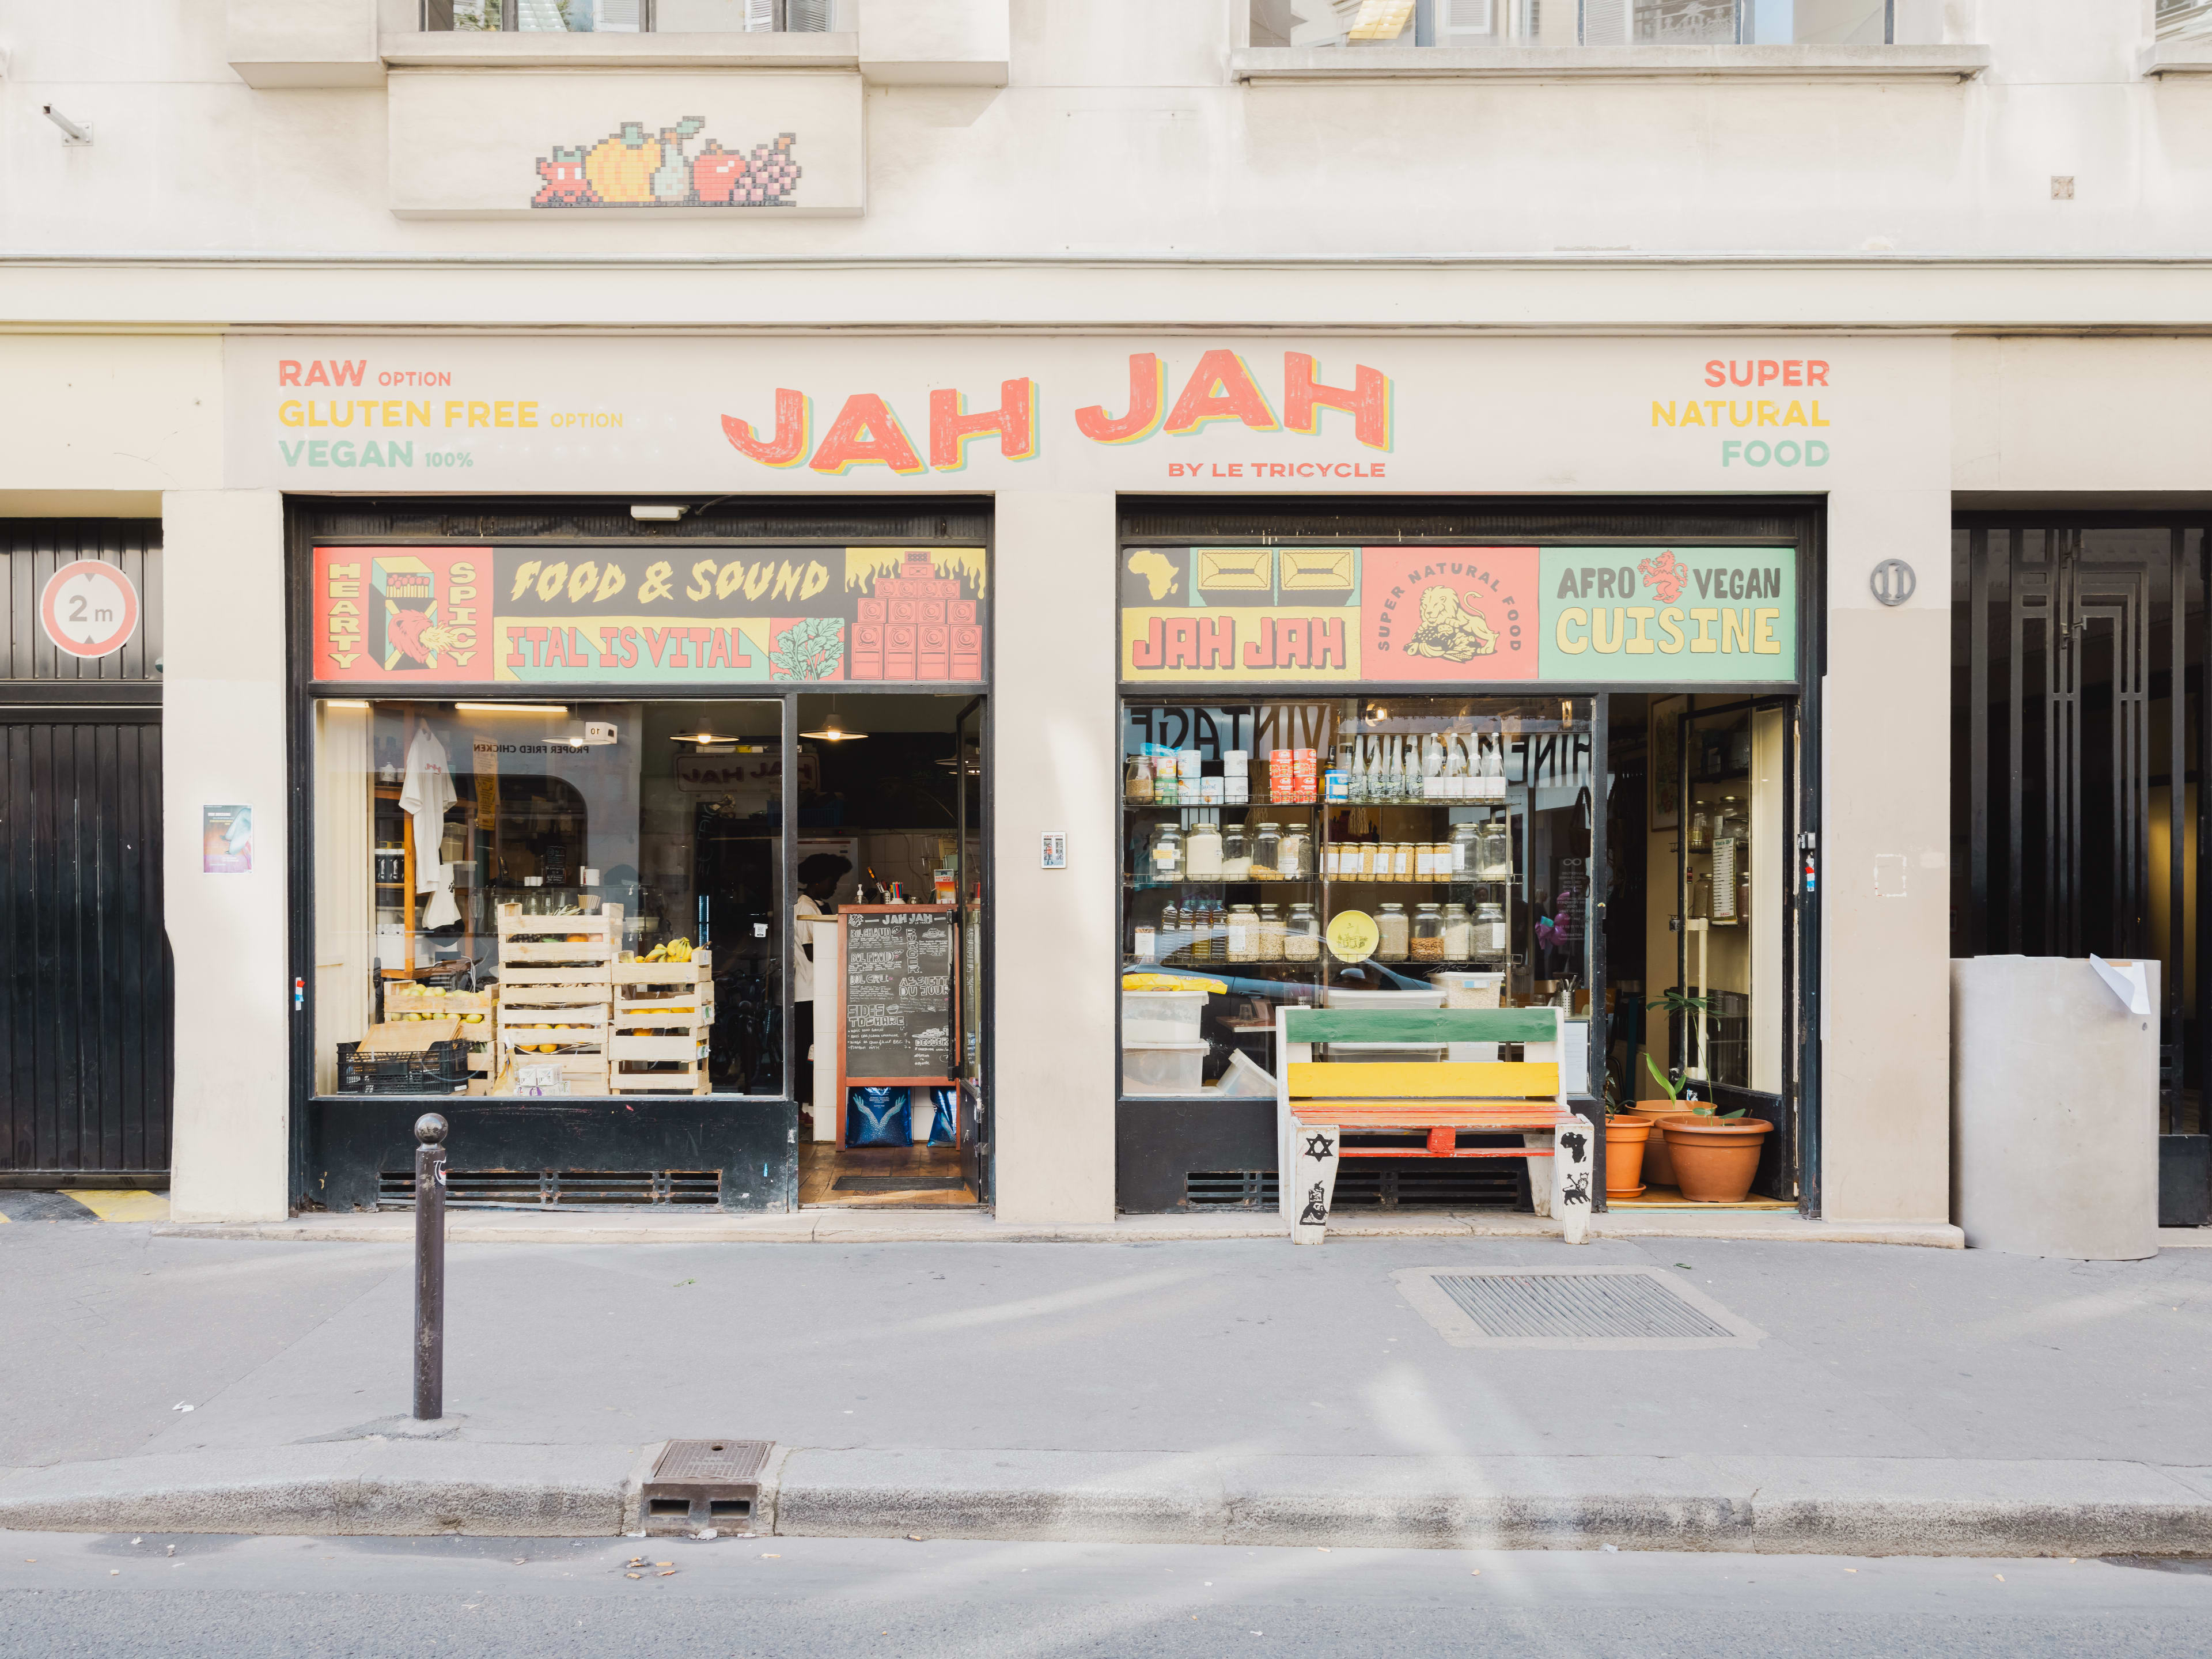 The colorful exterior of Jah Jah, a Afro Vegan restaurant in Paris